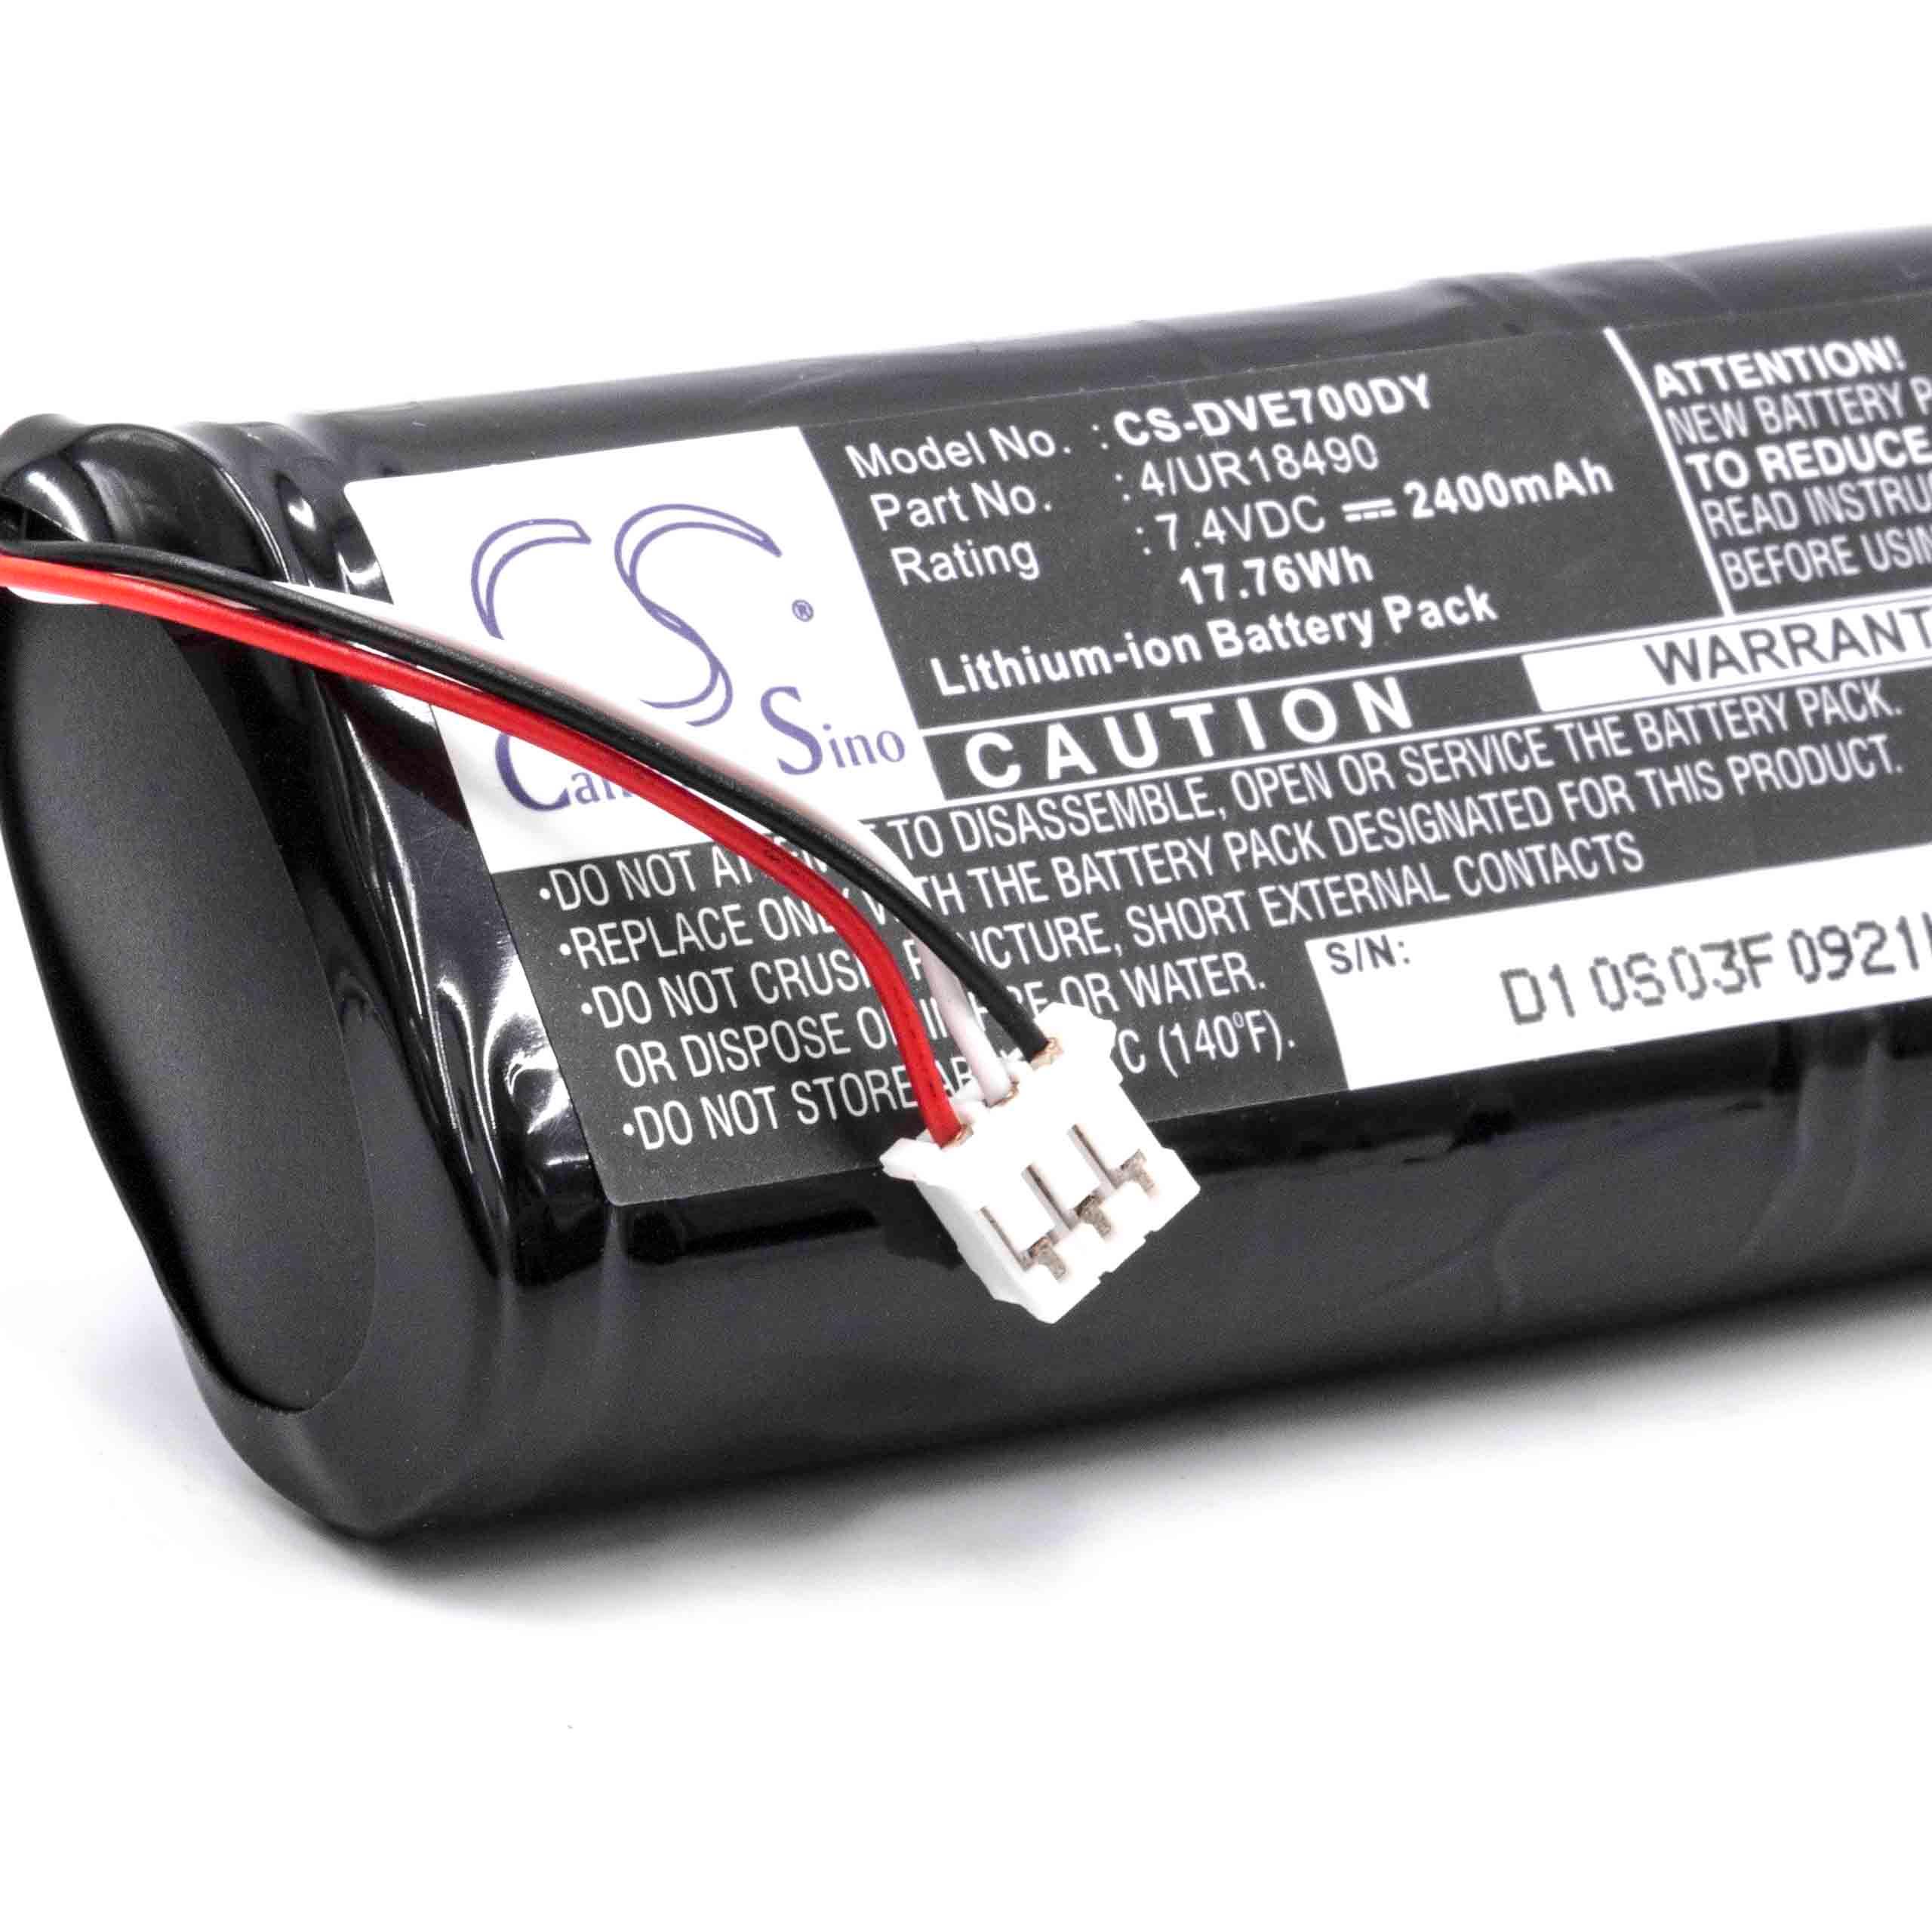 Batería reemplaza Sony 4/UR18490 para reproductor DVD Sony - 2400 mAh 7,4 V Li-Ion